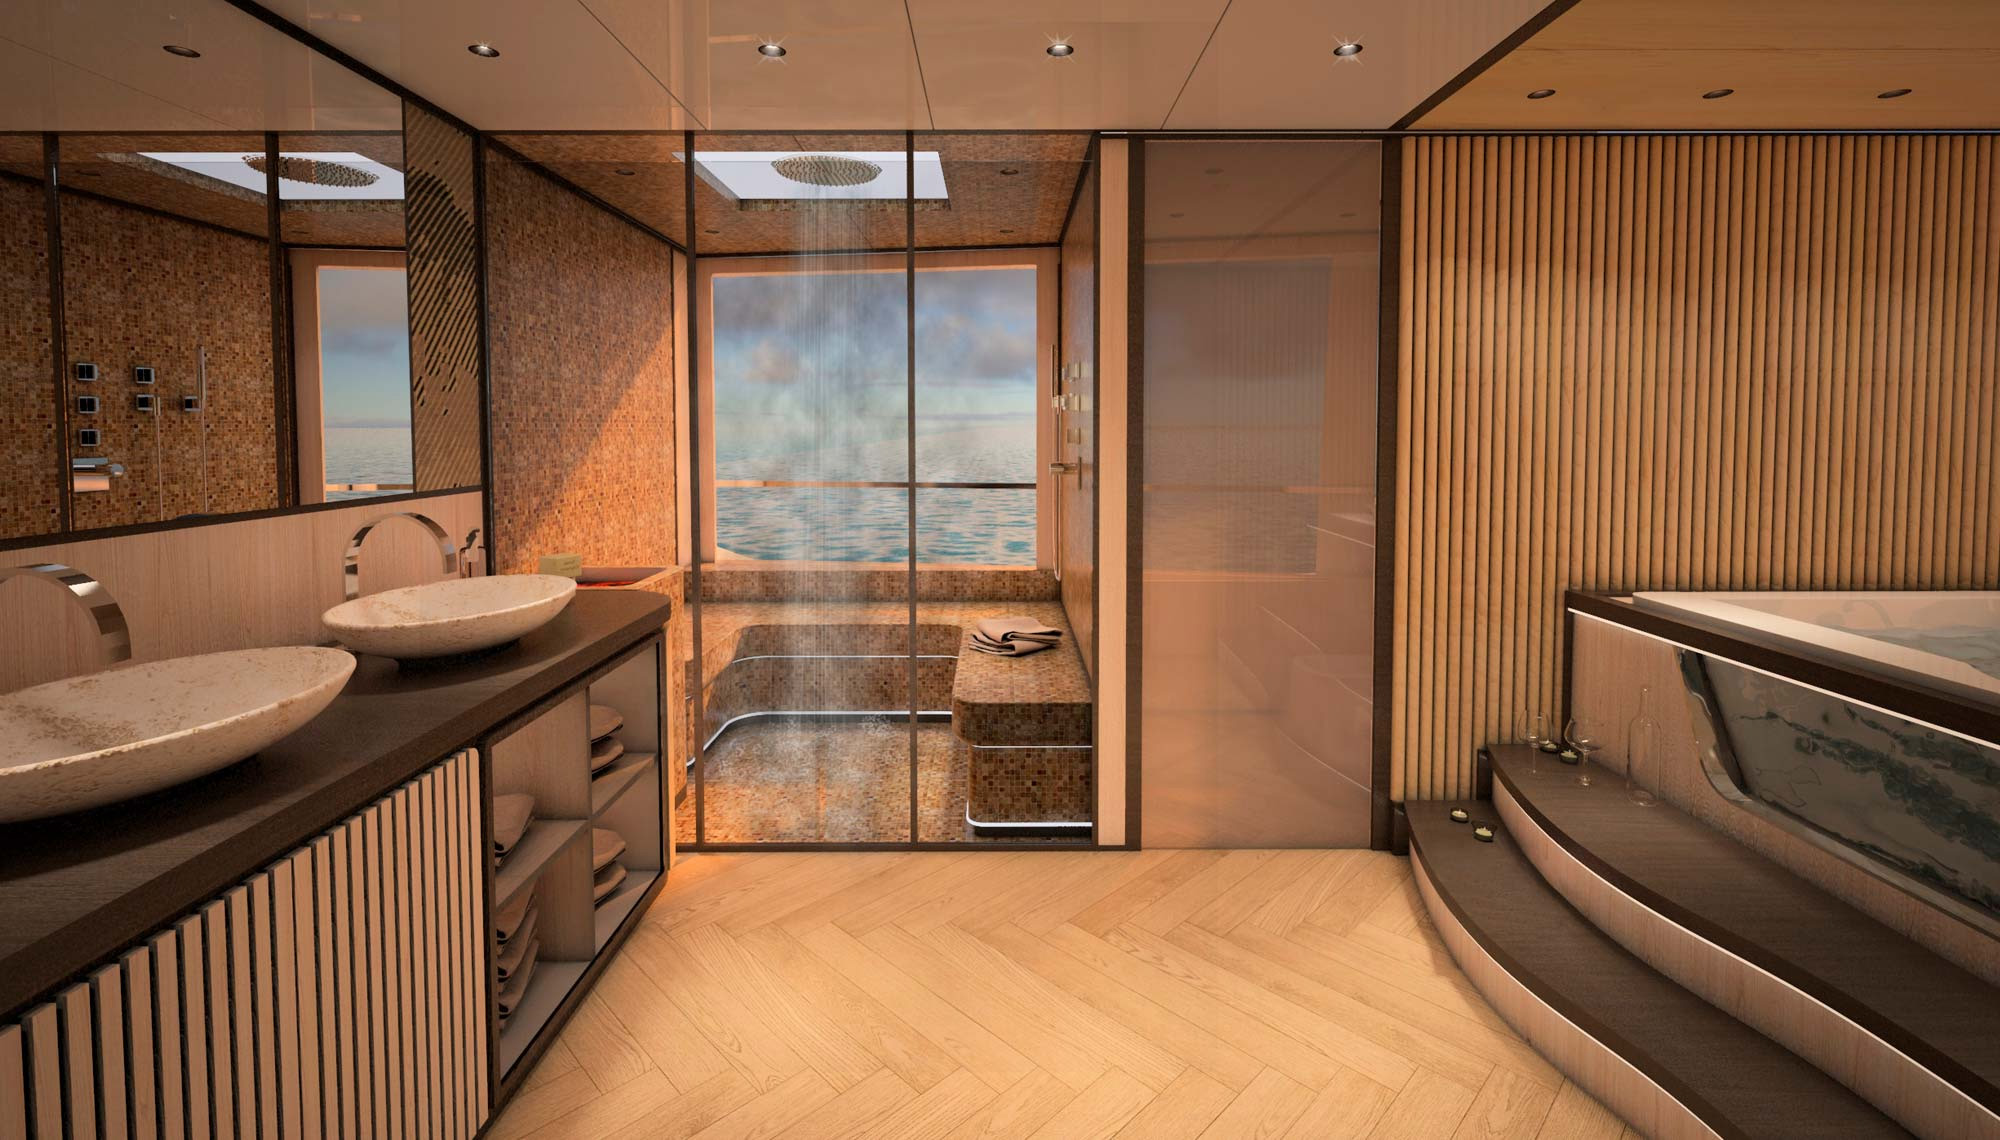 Luxurious yacht bathroom with a jacuzzi and a sauna